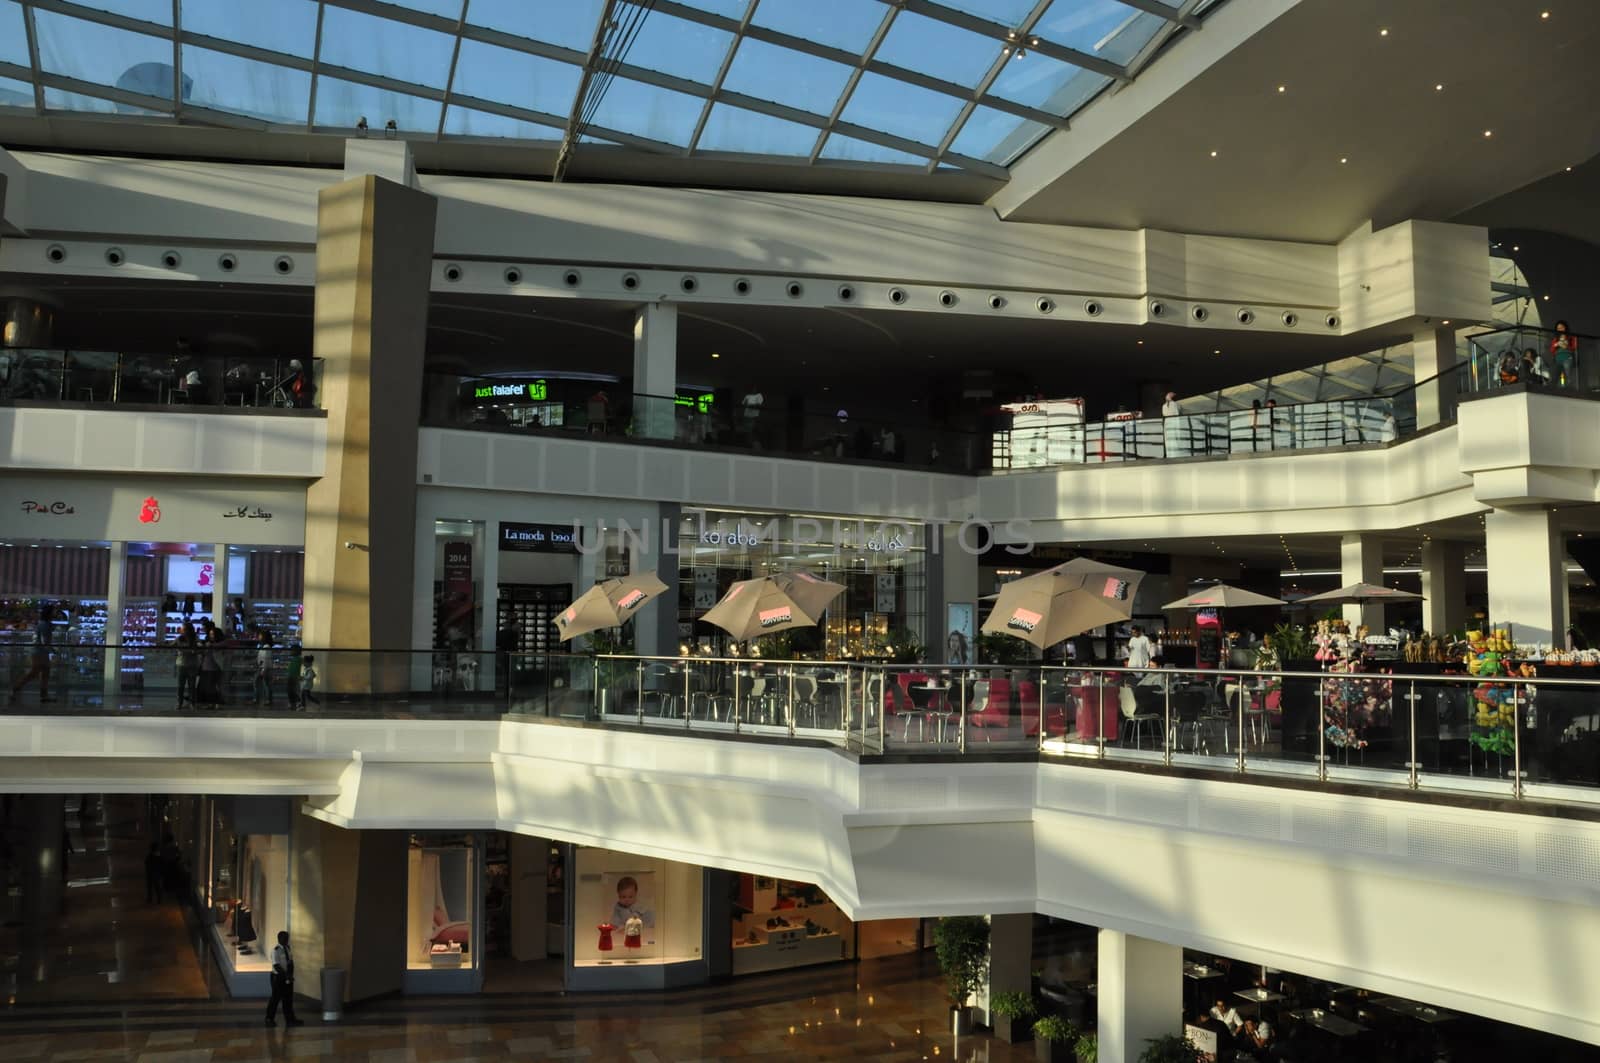 Festival Centre Mall in Dubai, UAE. Dubai Festival City is the Middle East's largest mixed-use development.